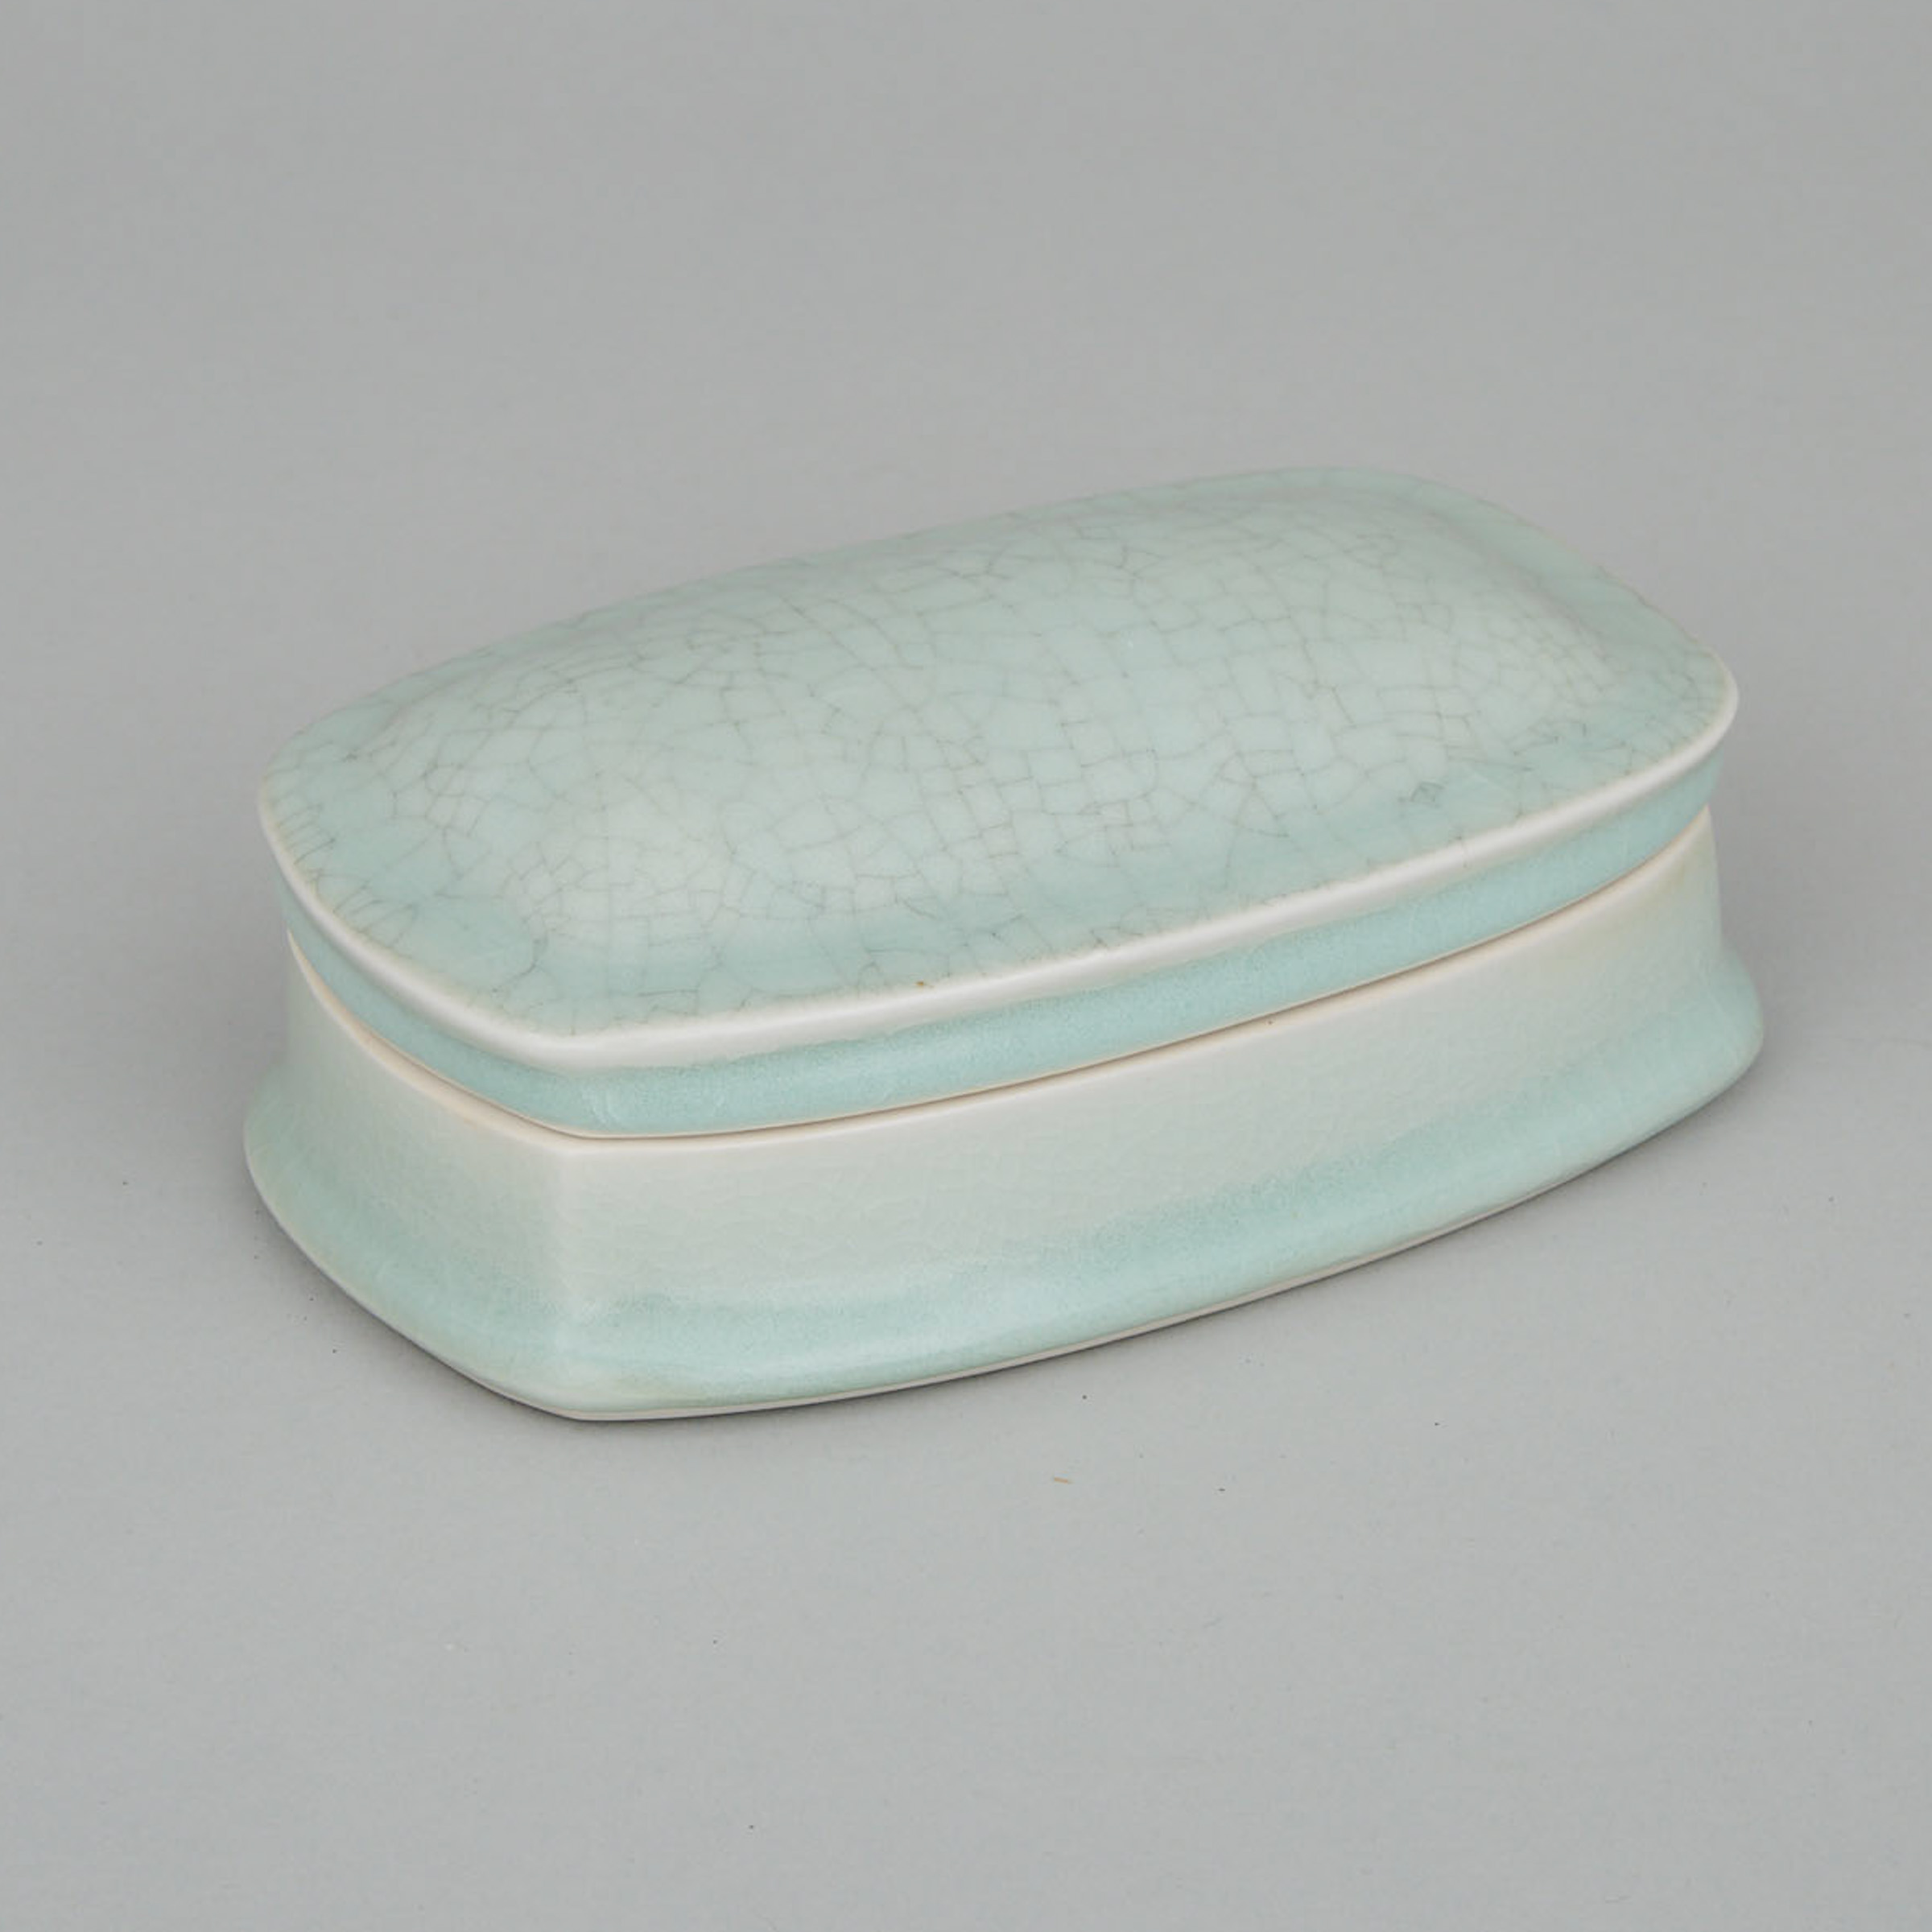 Bruce Cochrane (Canadian, b.1953), Celadon Glazed Porcelain Box, c.1998